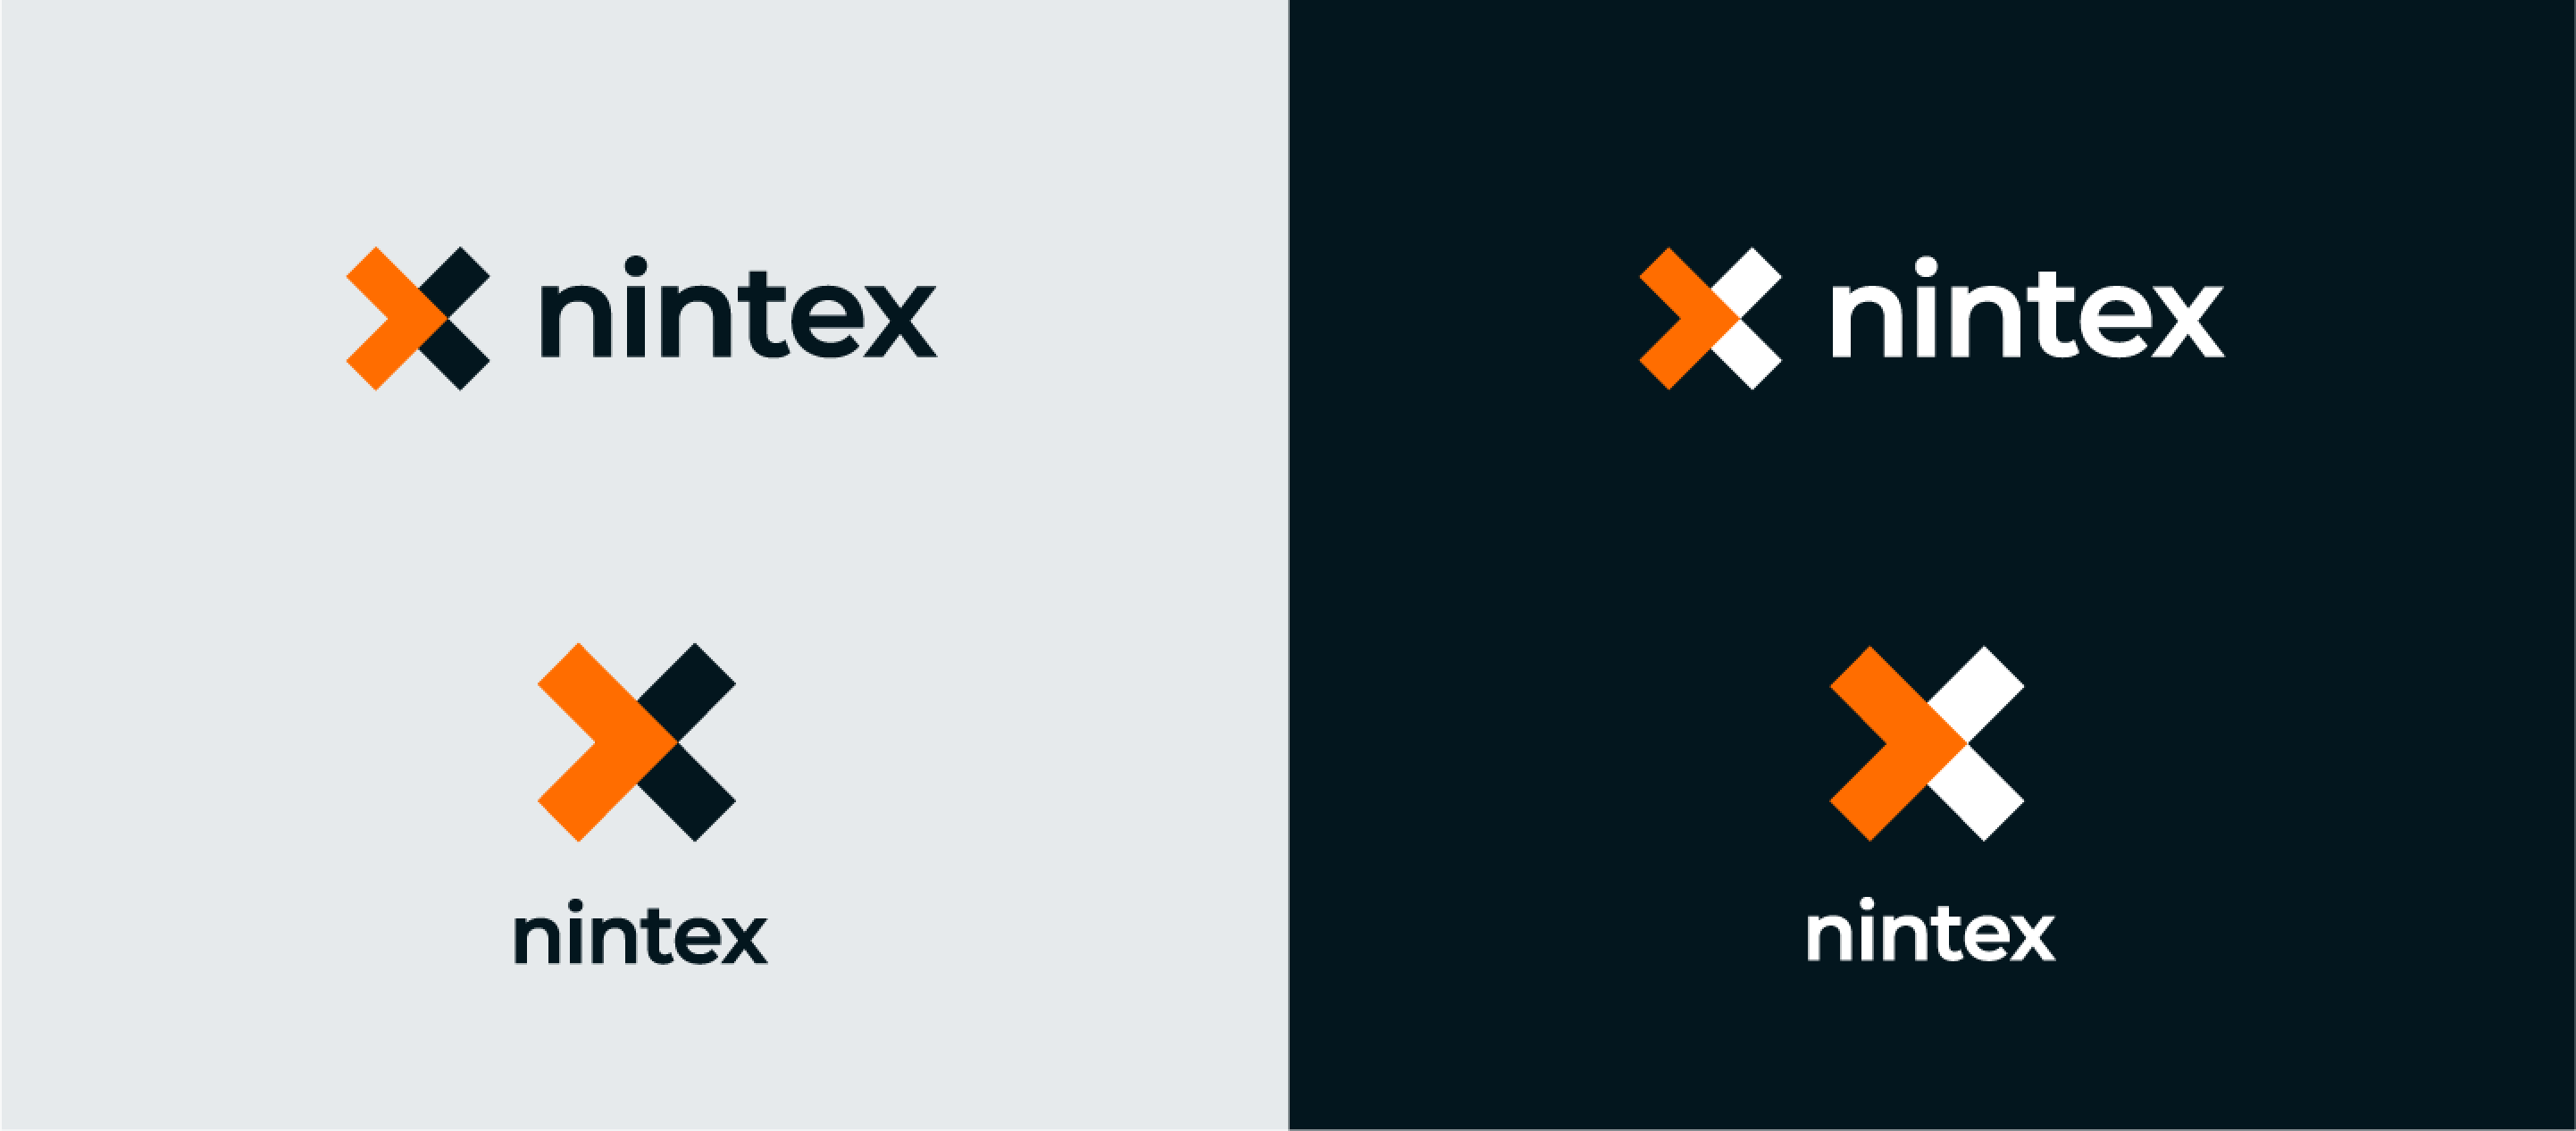 Nintex logo lockups with refreshed x